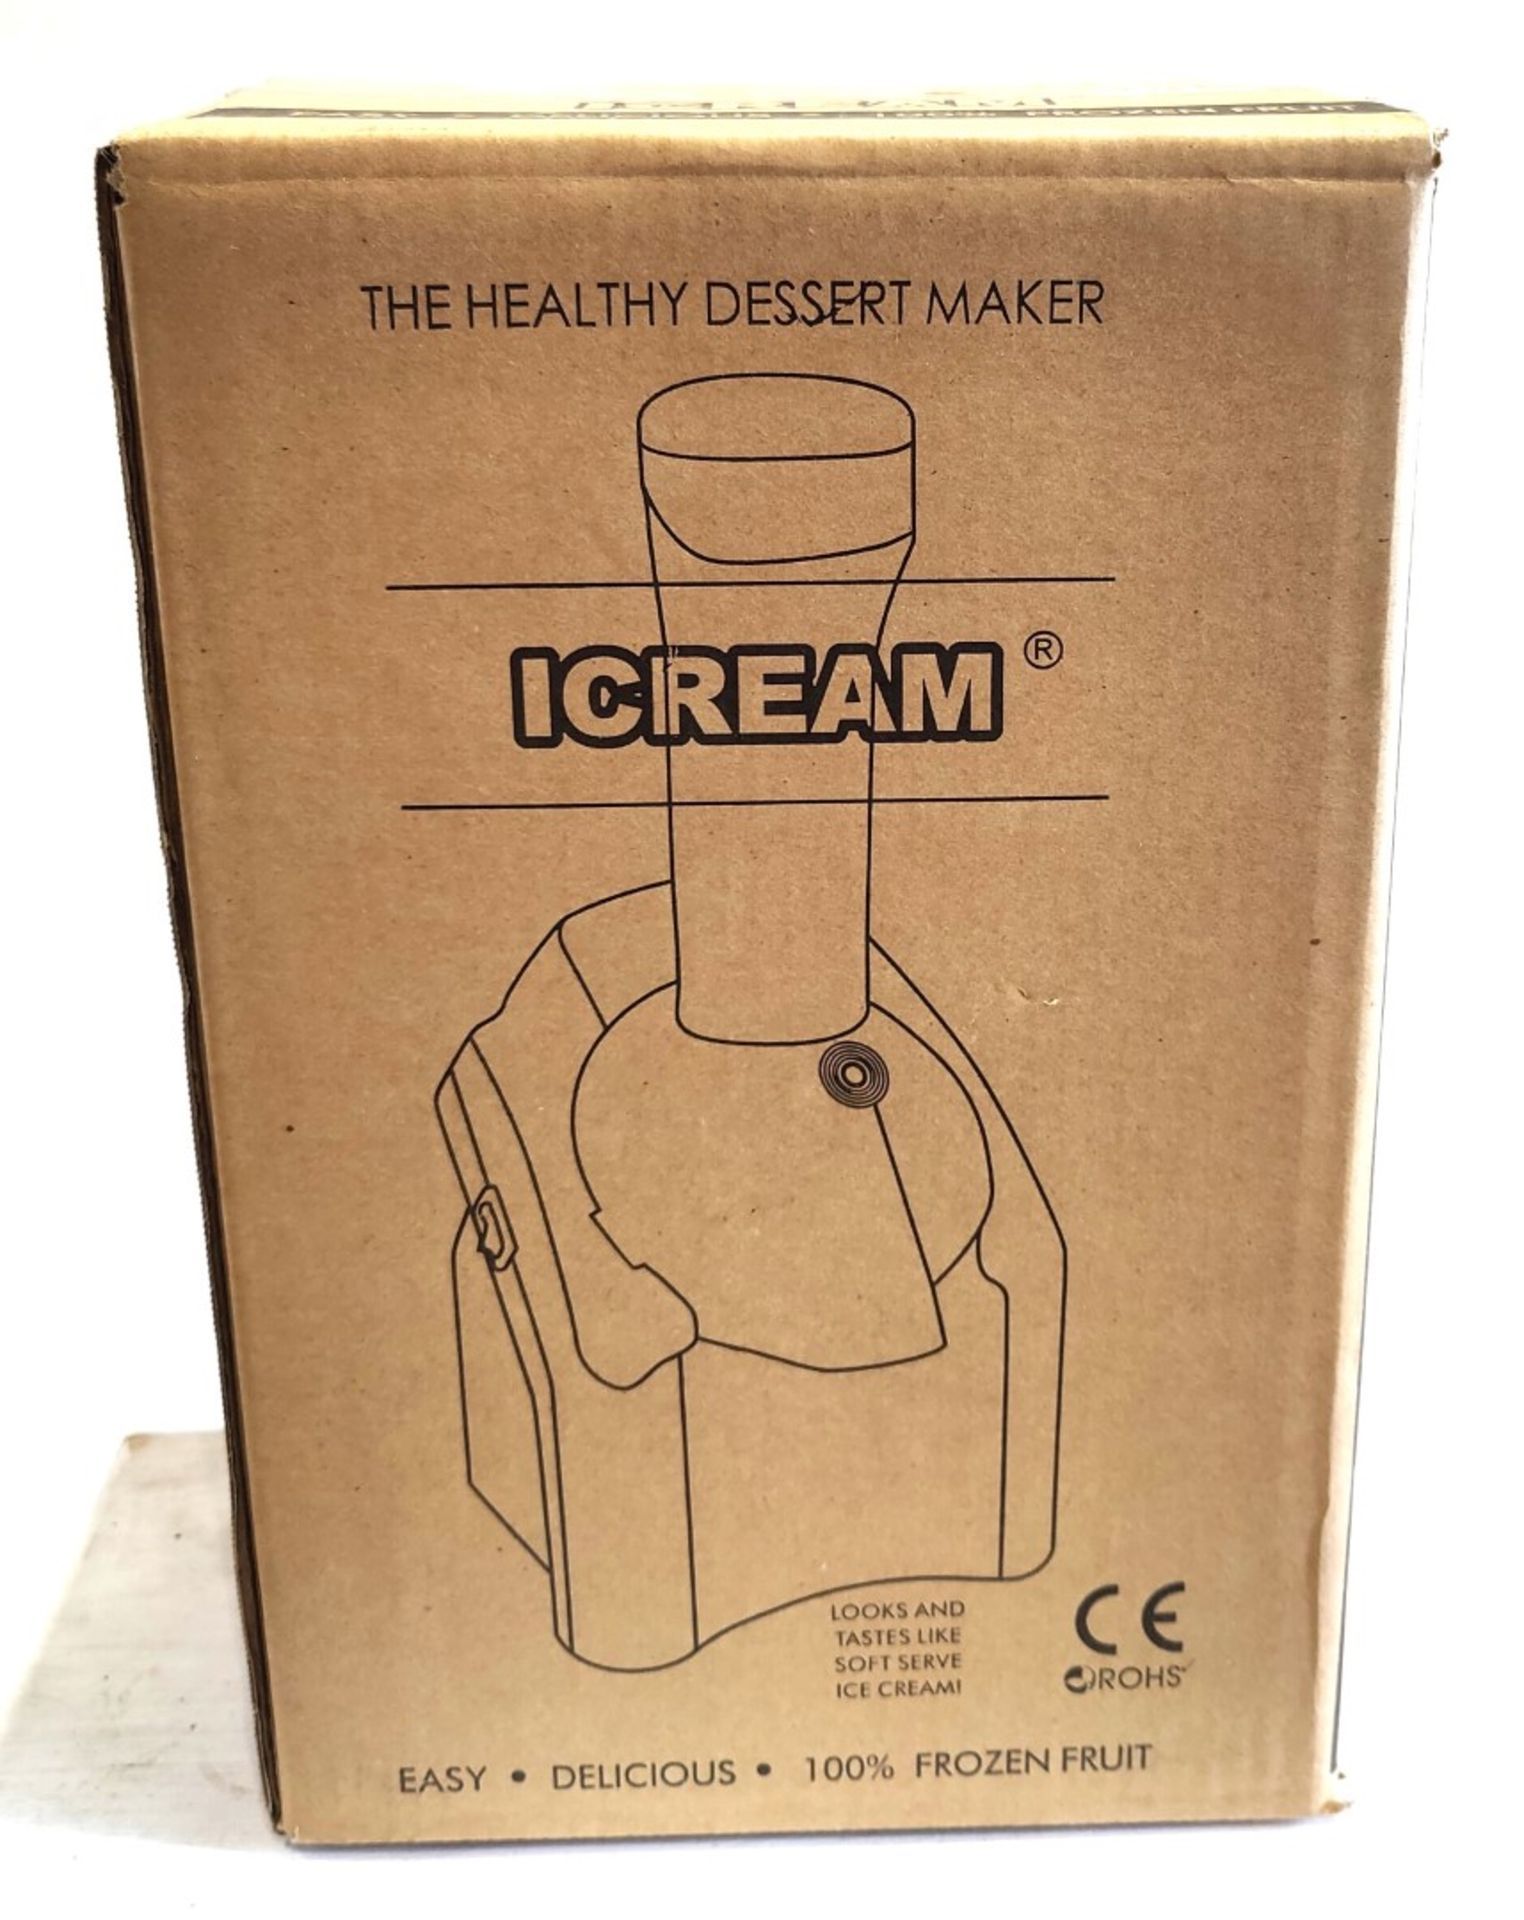 1 x Icream Healthy Desert Maker - Yogurt and Soft Ice Cream Home Appliance - 240v - Brand New - Image 10 of 12